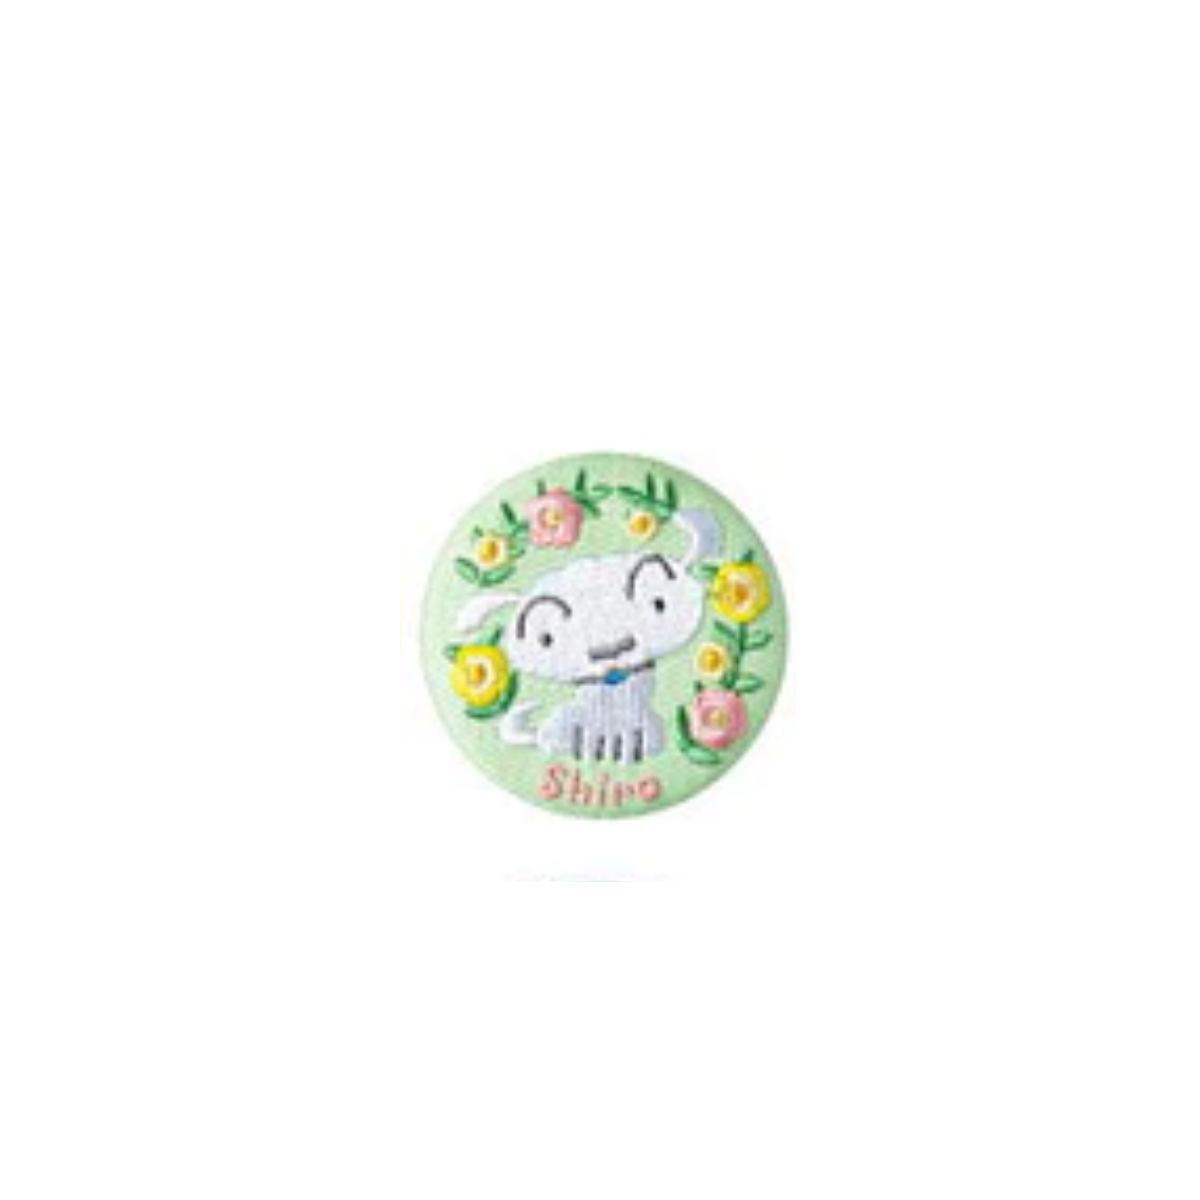 Can Badge Collection Crayon Shin-Chan 14/112-Single Pack (Random)-Bandai-Ace Cards &amp; Collectibles